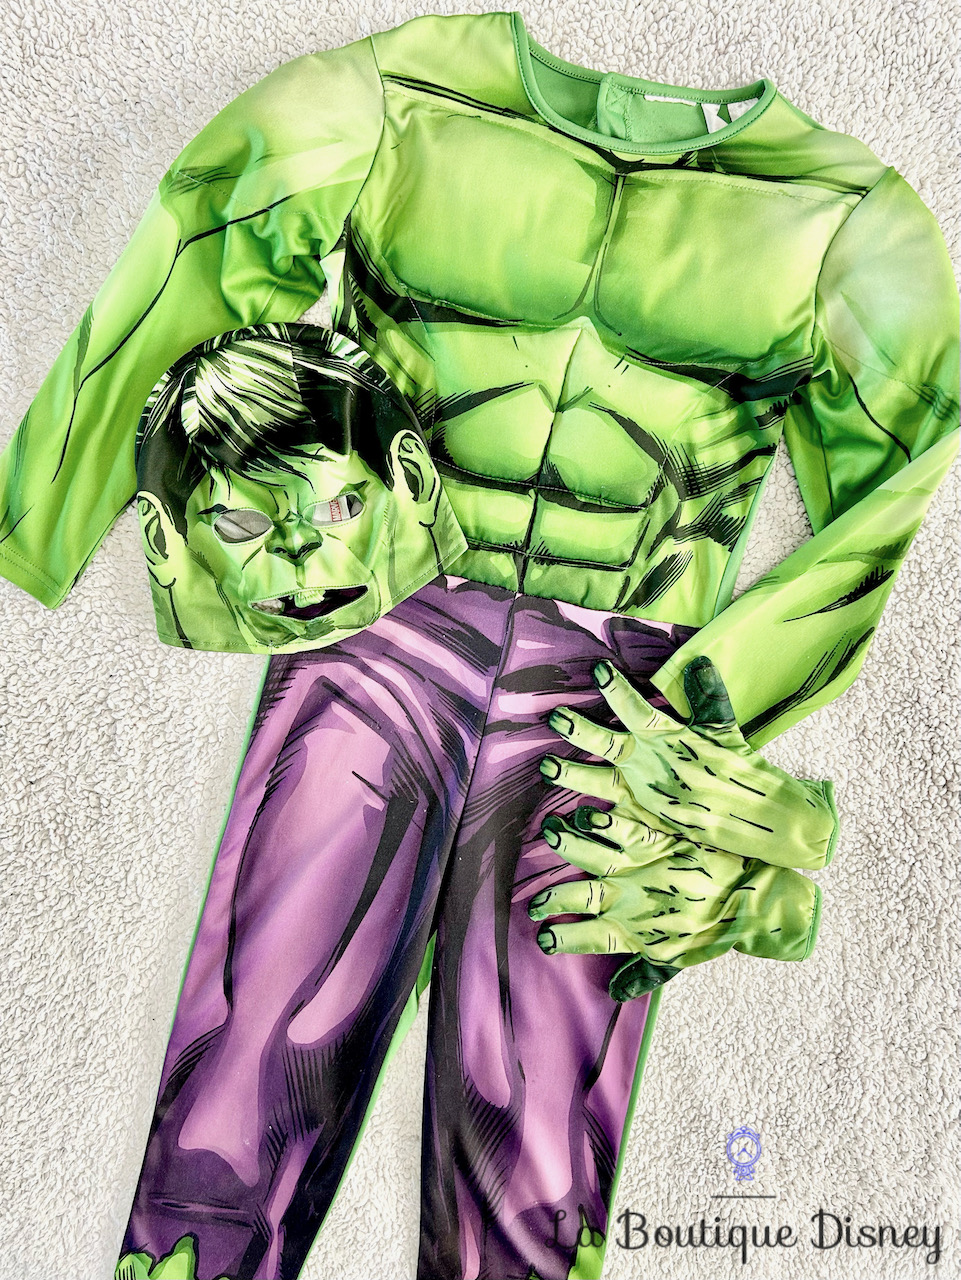 Déguisement Hulk Marvel Disney taille 4/6 ans combinaison vert masque gants